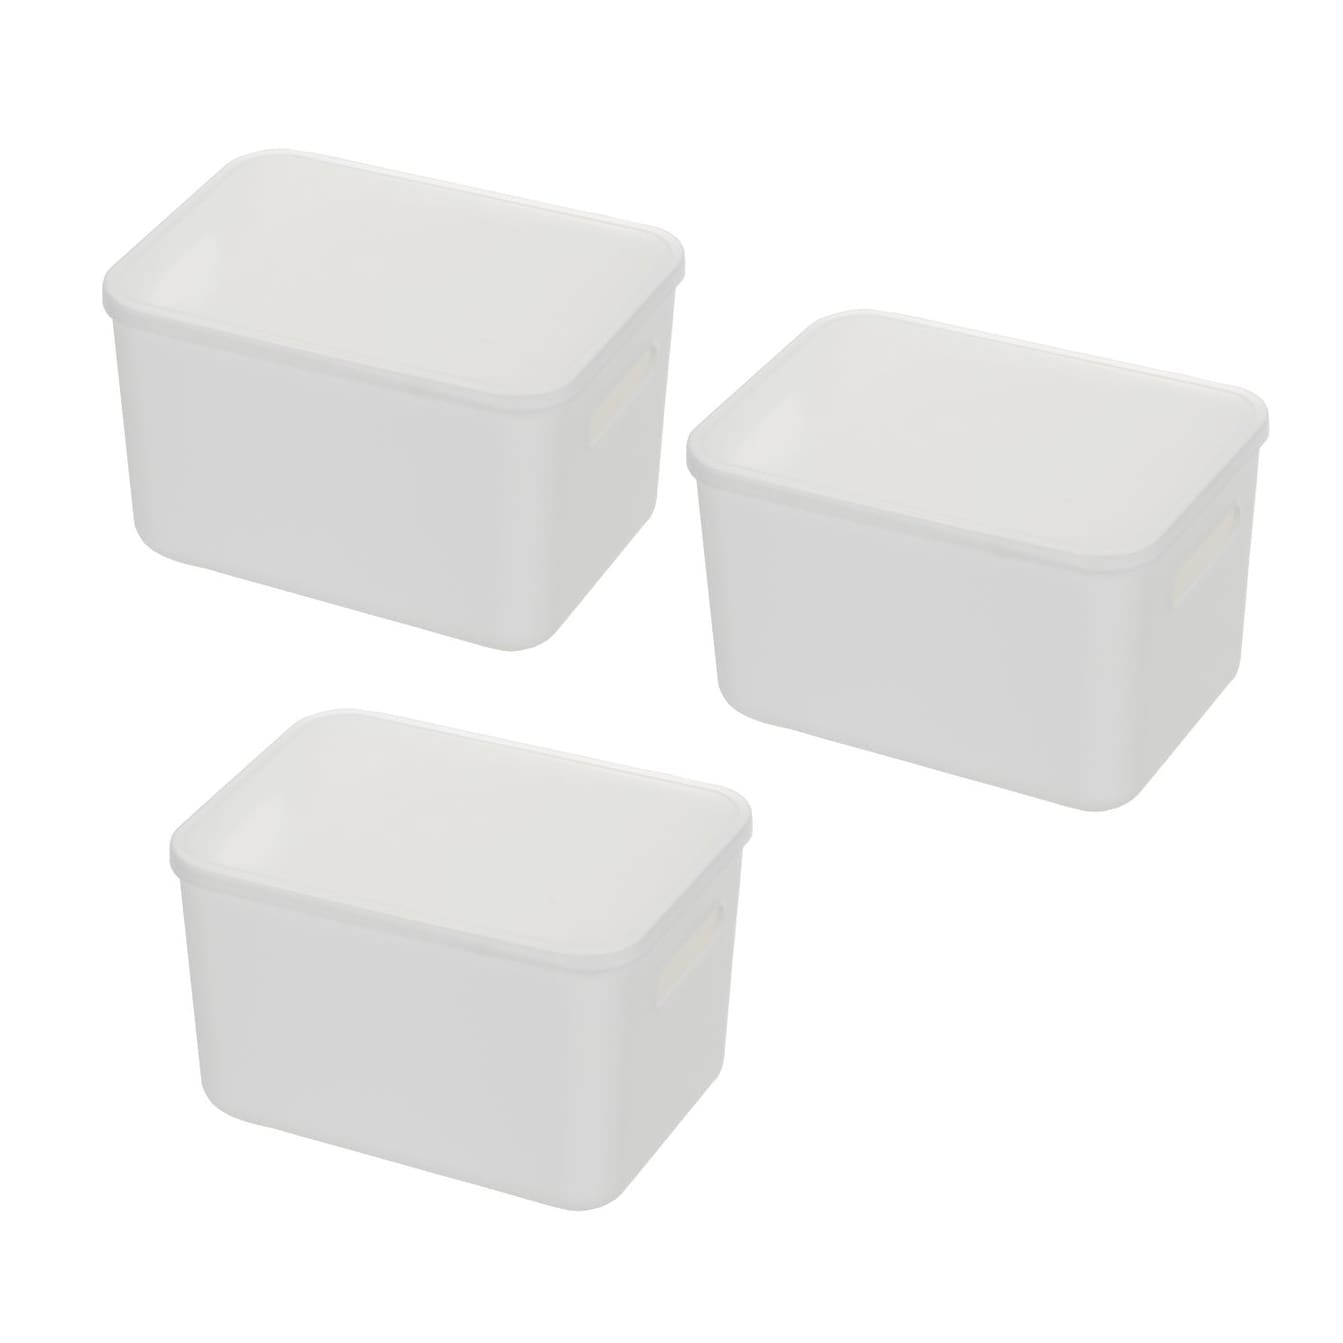 ULENDIS 3 Pack Plastic Storage Bins with lid, Stackable Wardrobe